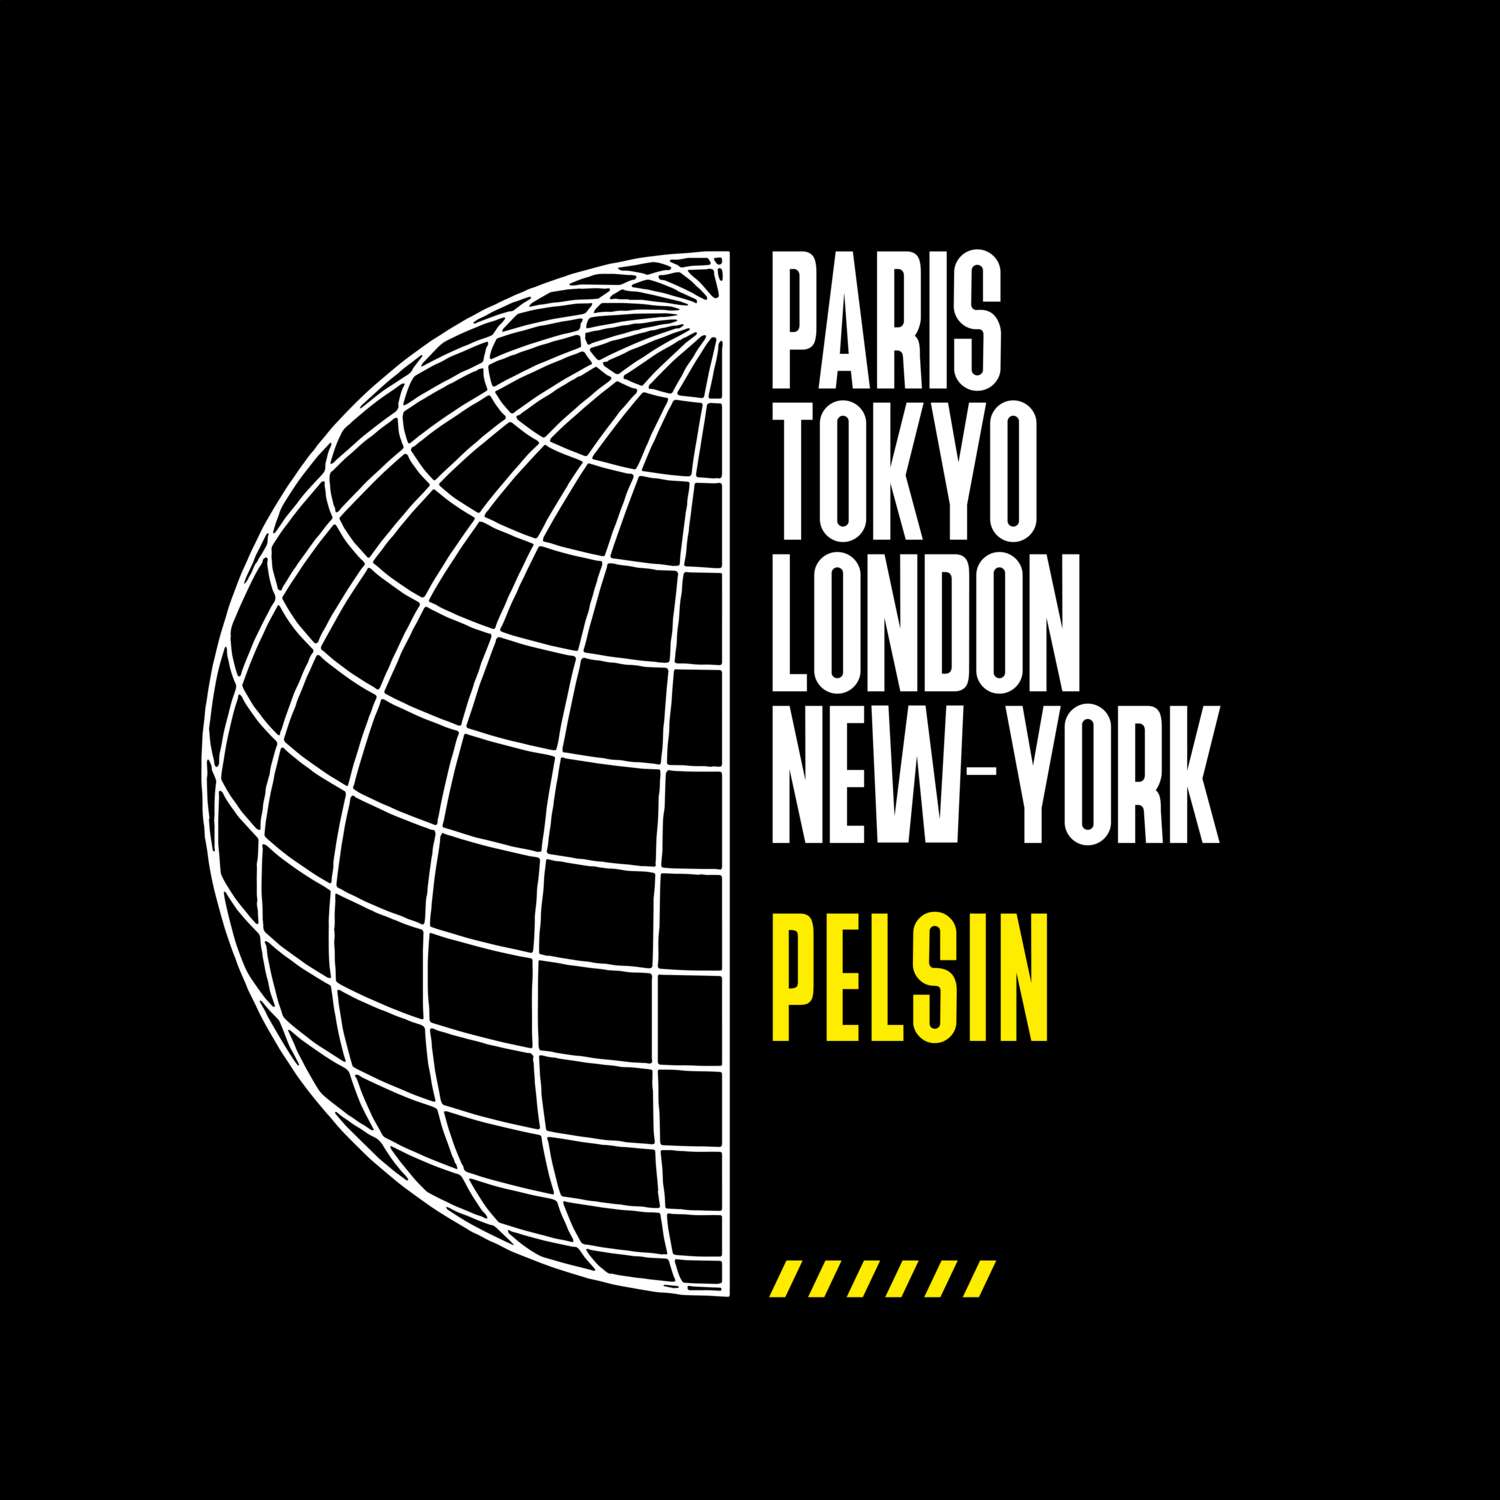 Pelsin T-Shirt »Paris Tokyo London«